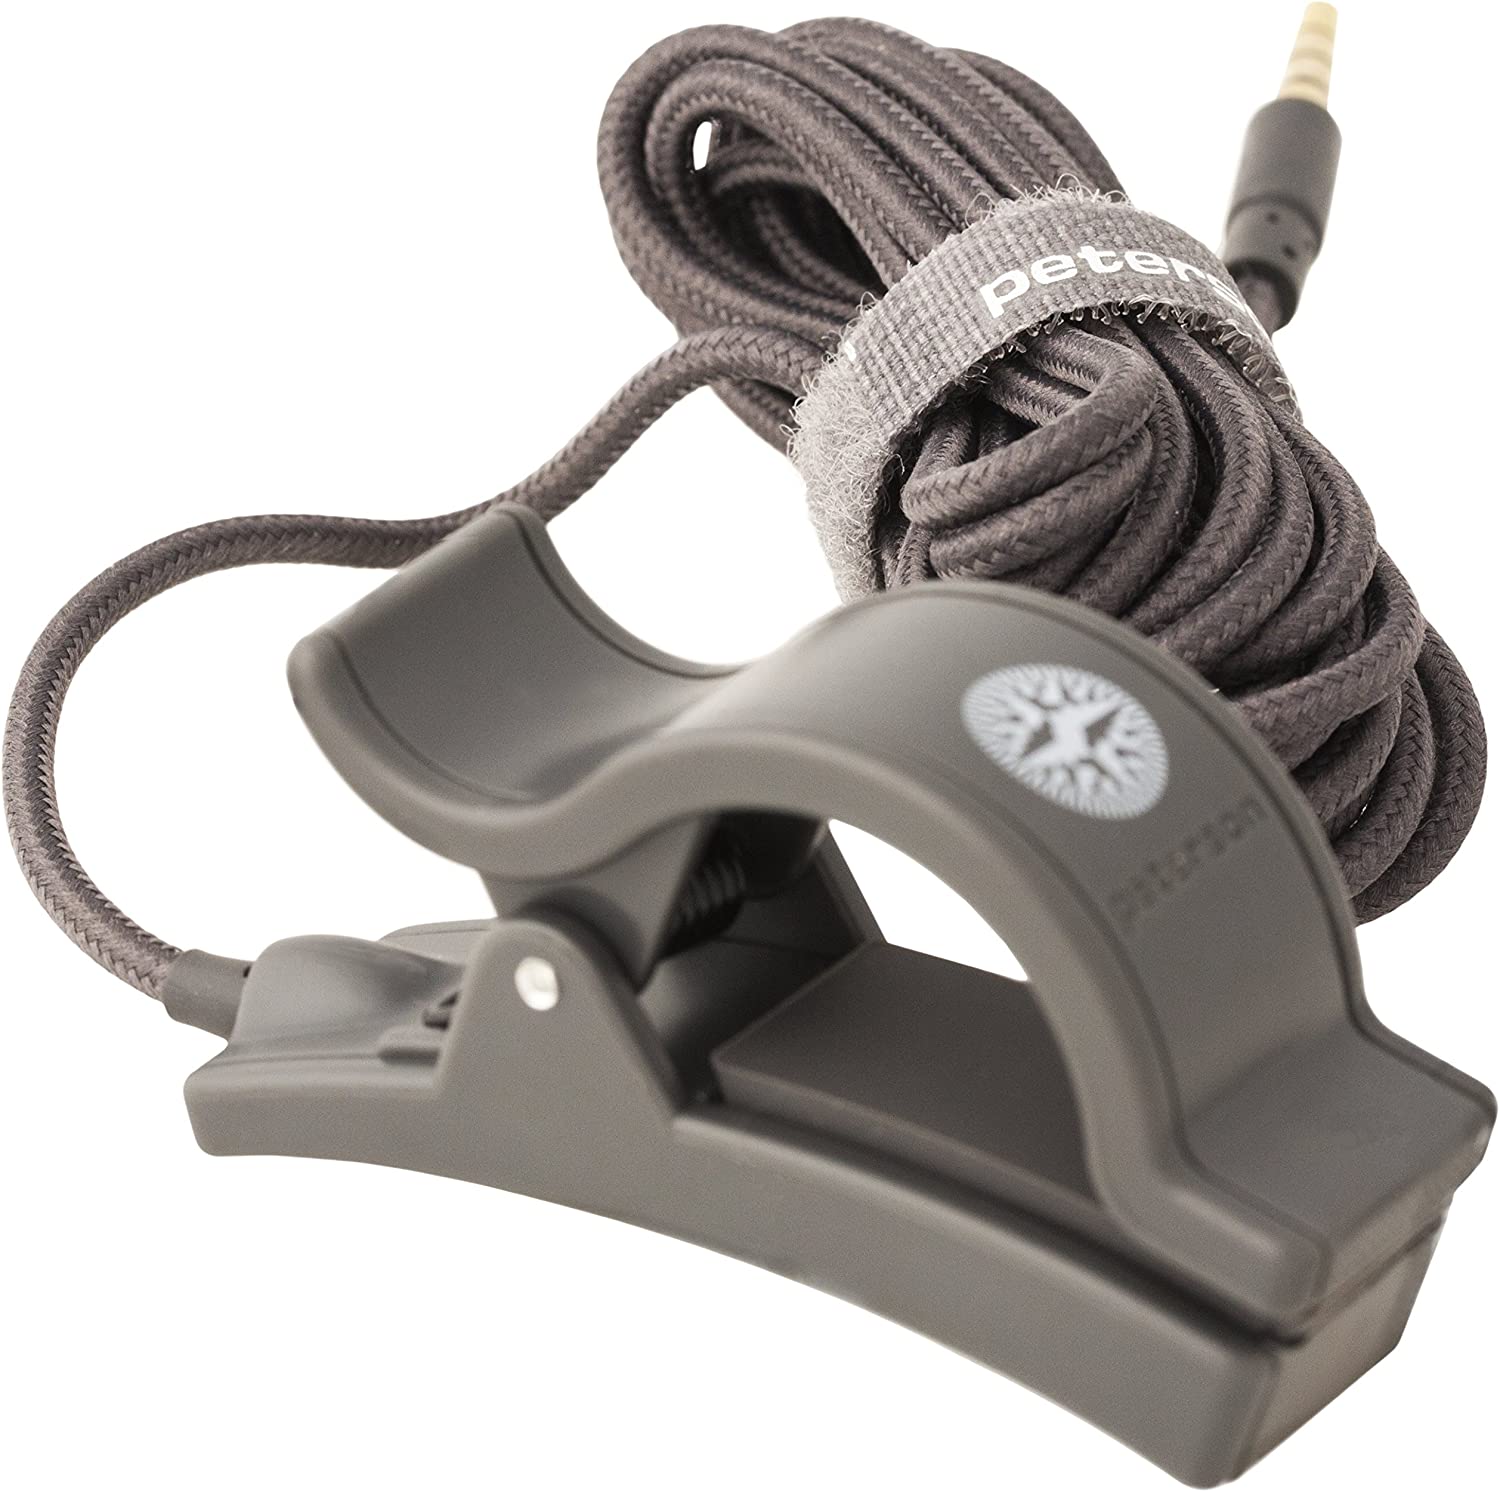 grey tuner pickup with headphone plug in